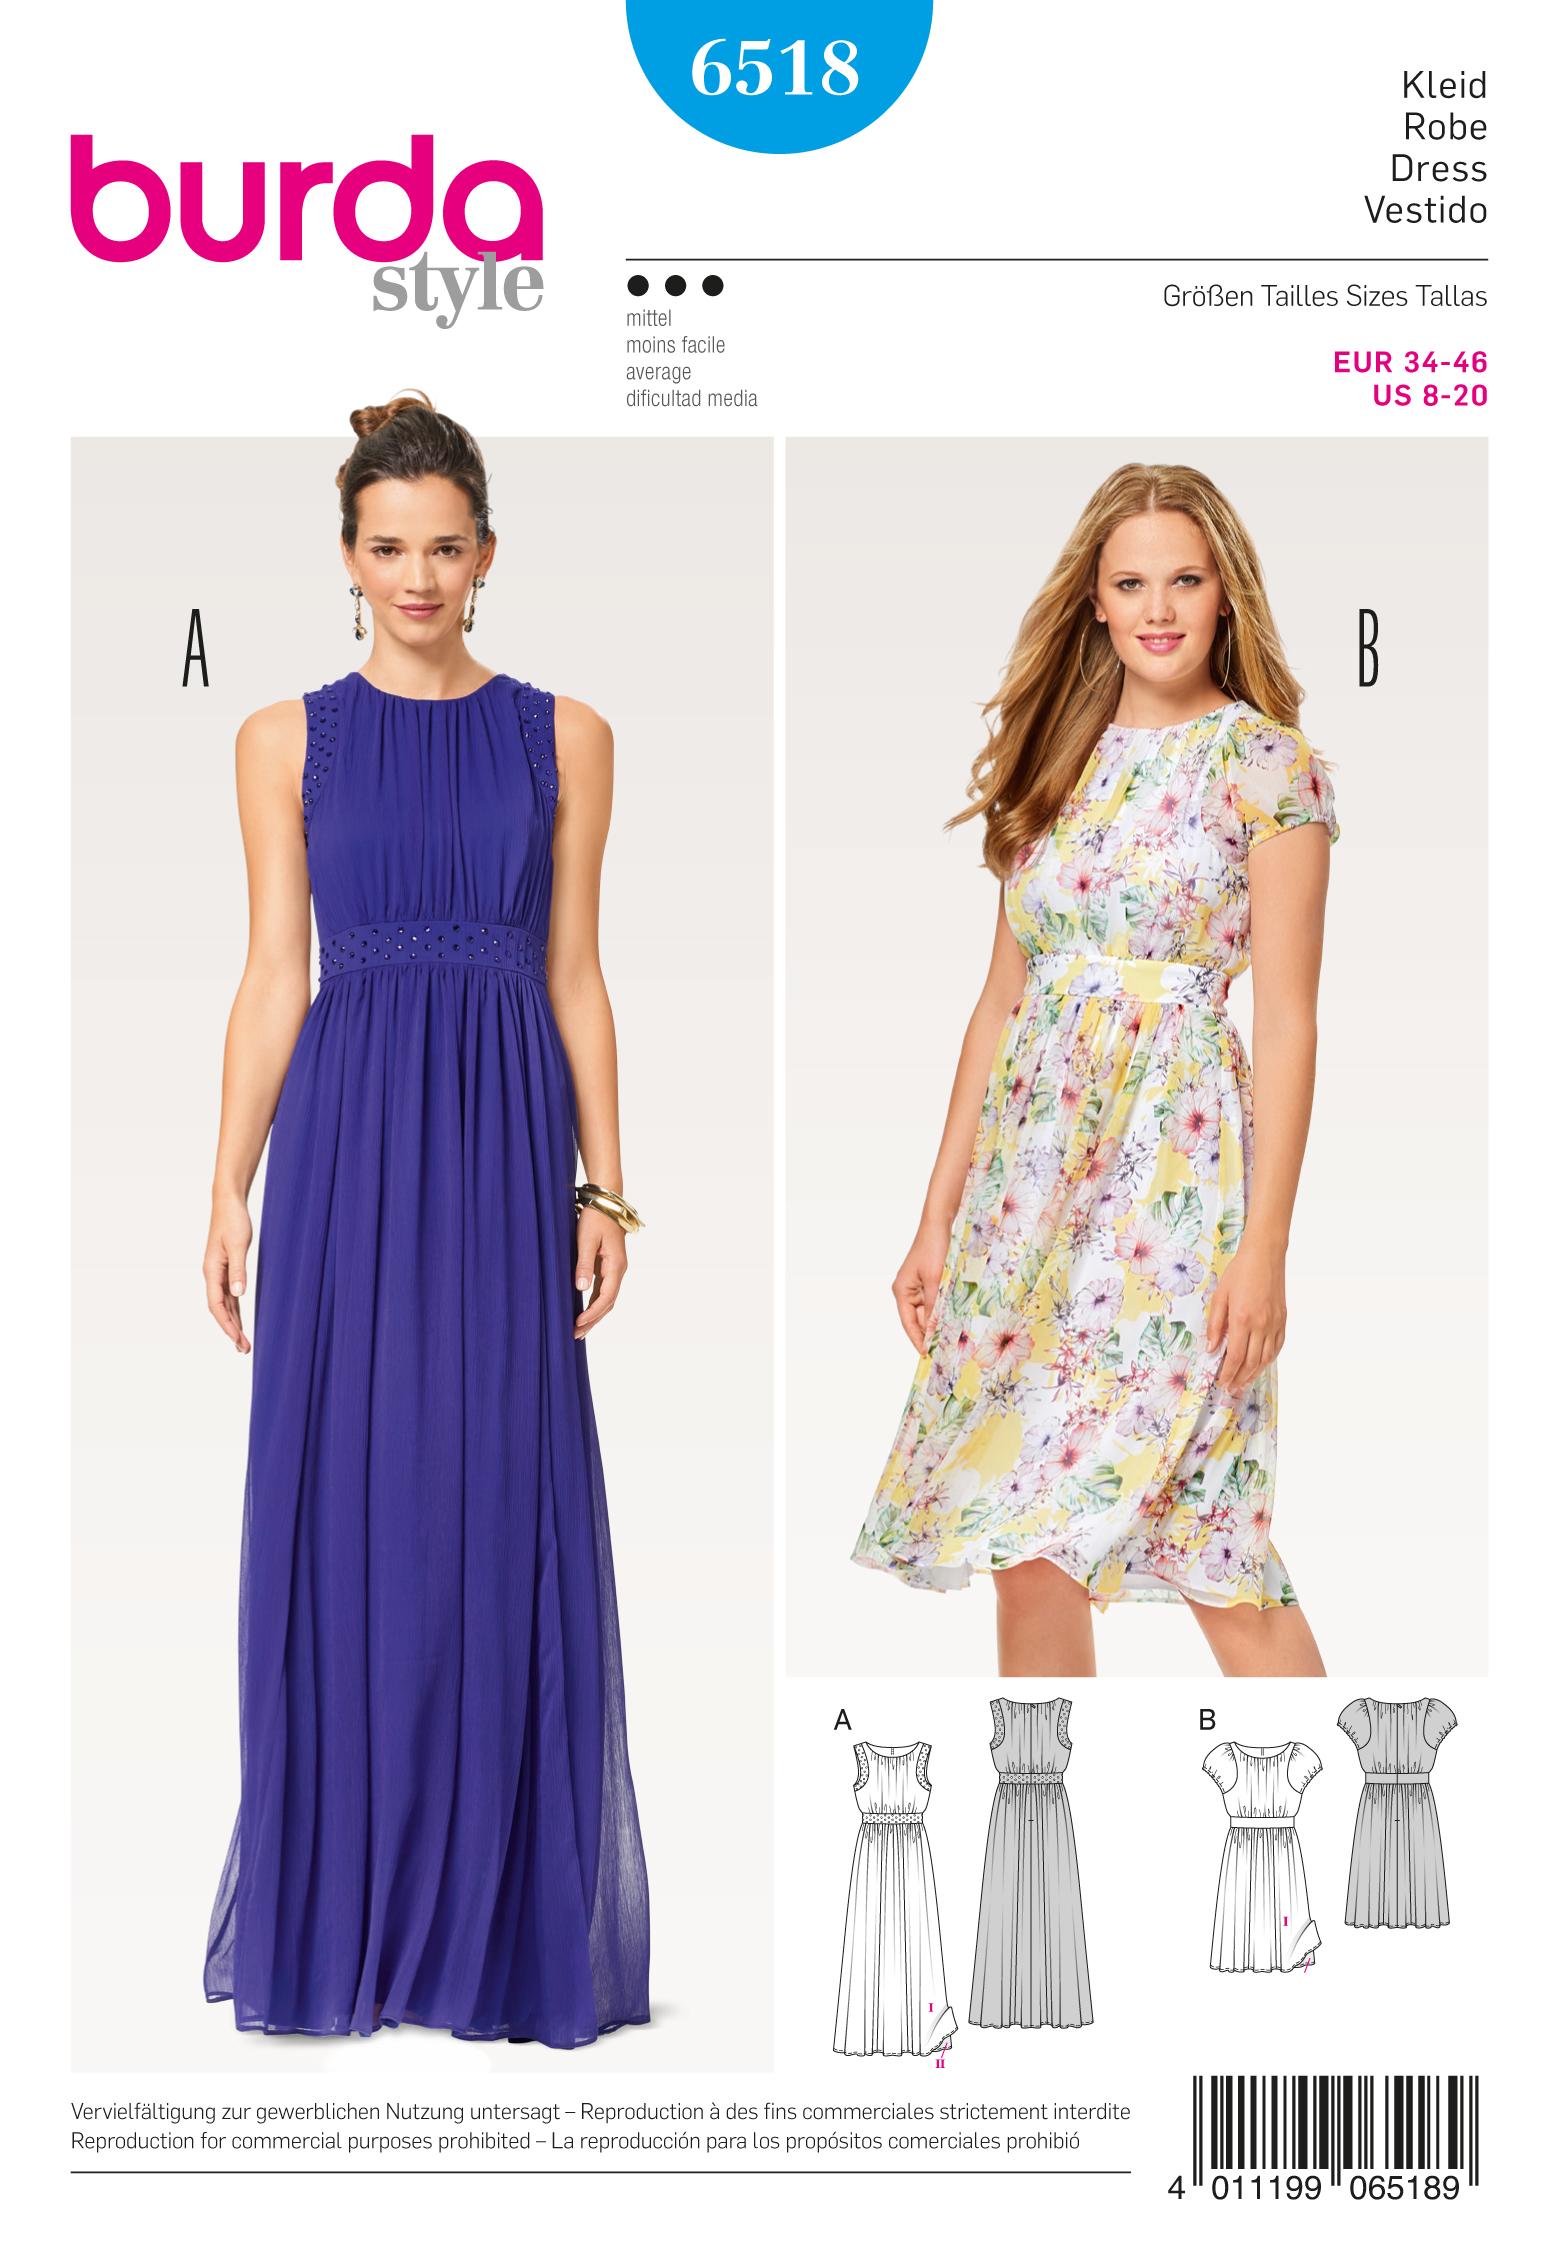 Burda B6518 Women's' Two Layered Dress